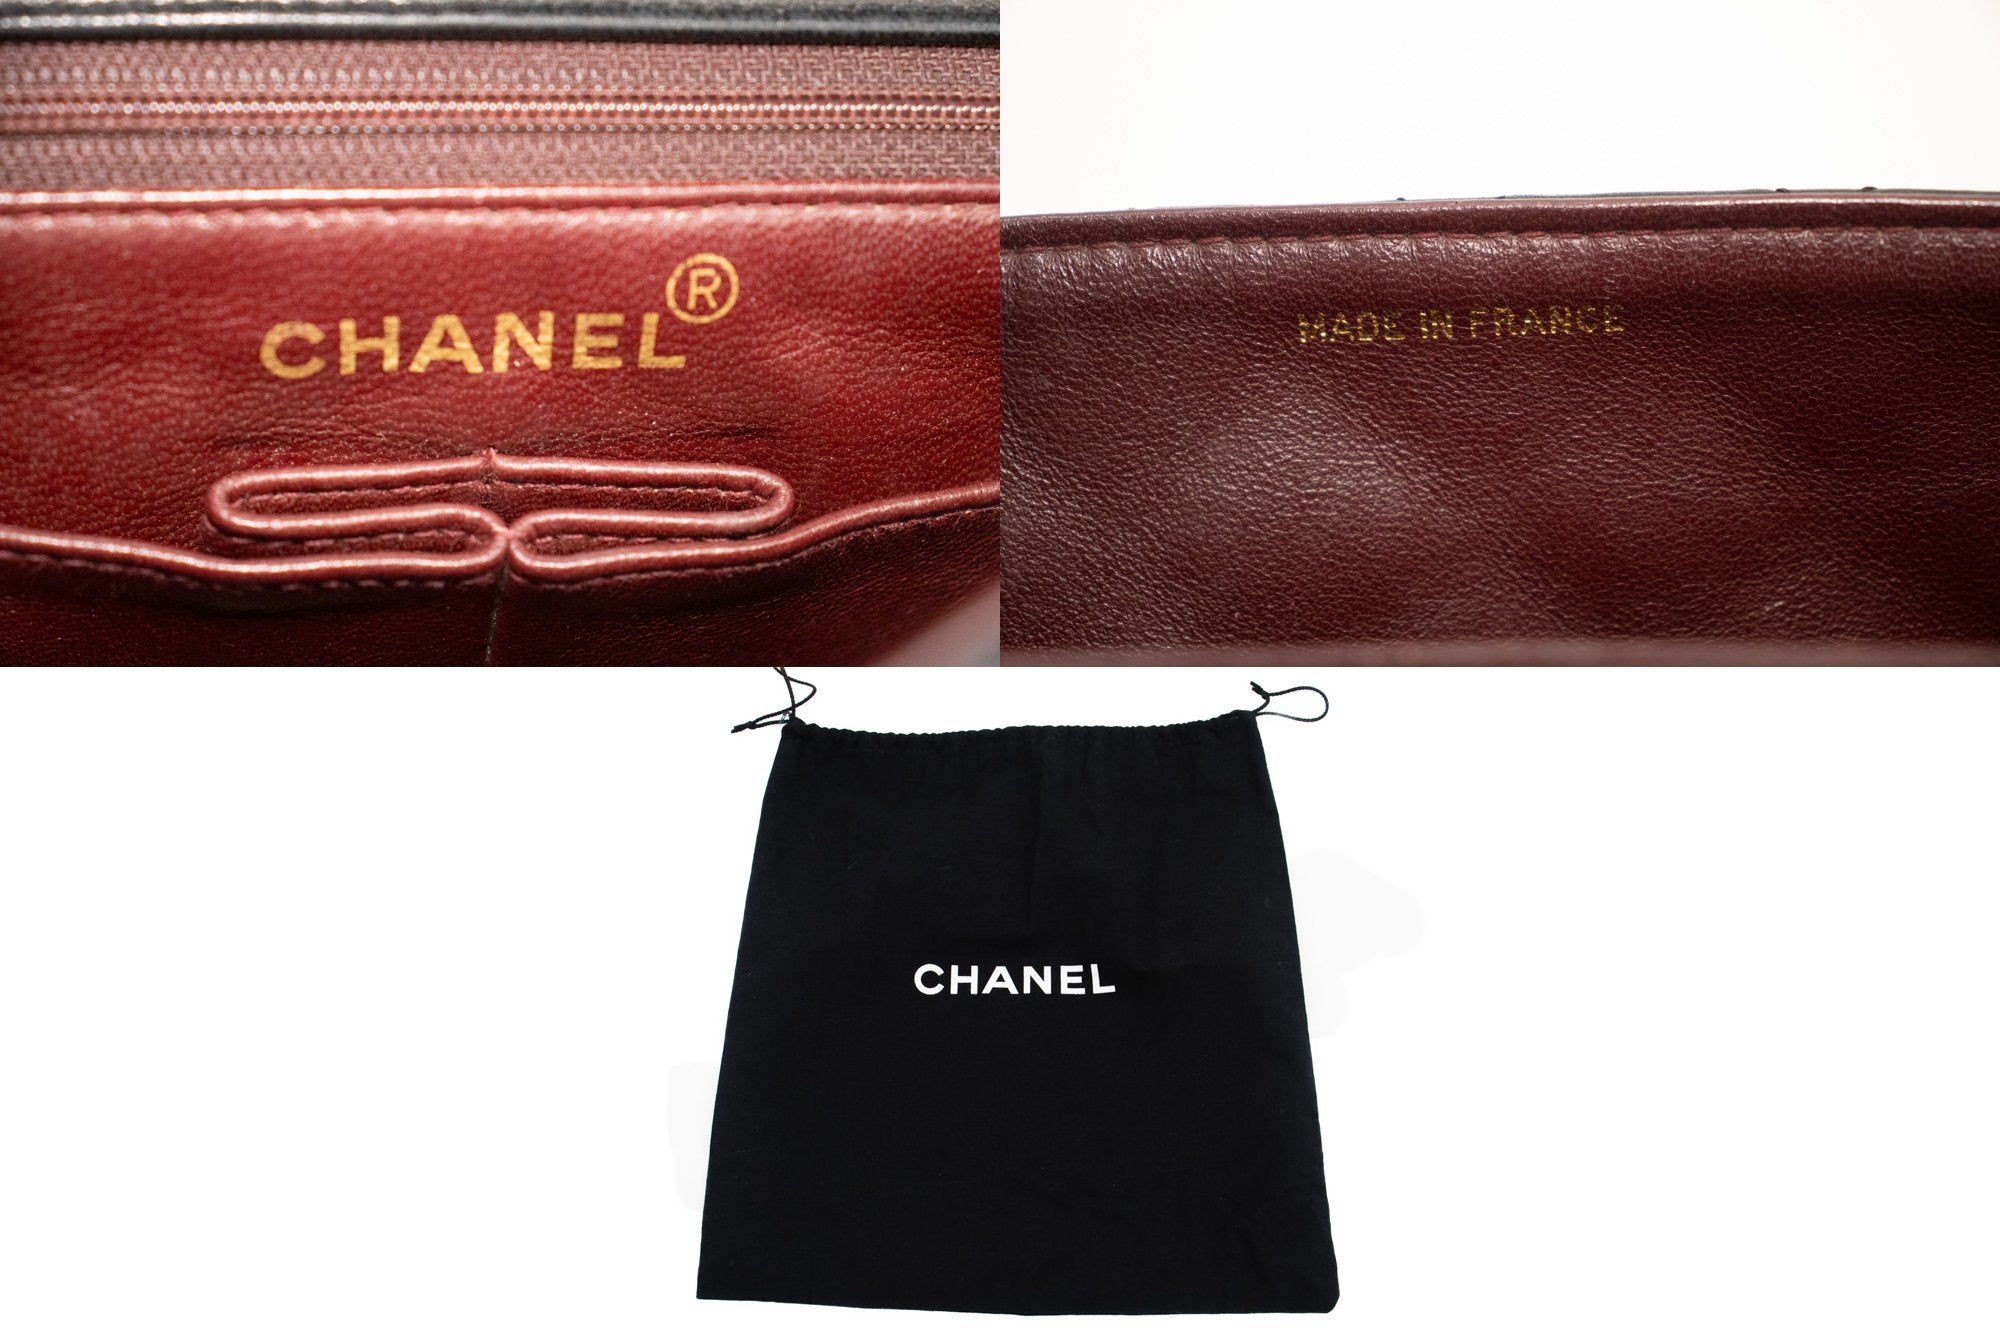 Chanel Mini Square Small Chain Shoulder Bag Crossbody Black Quilt G36